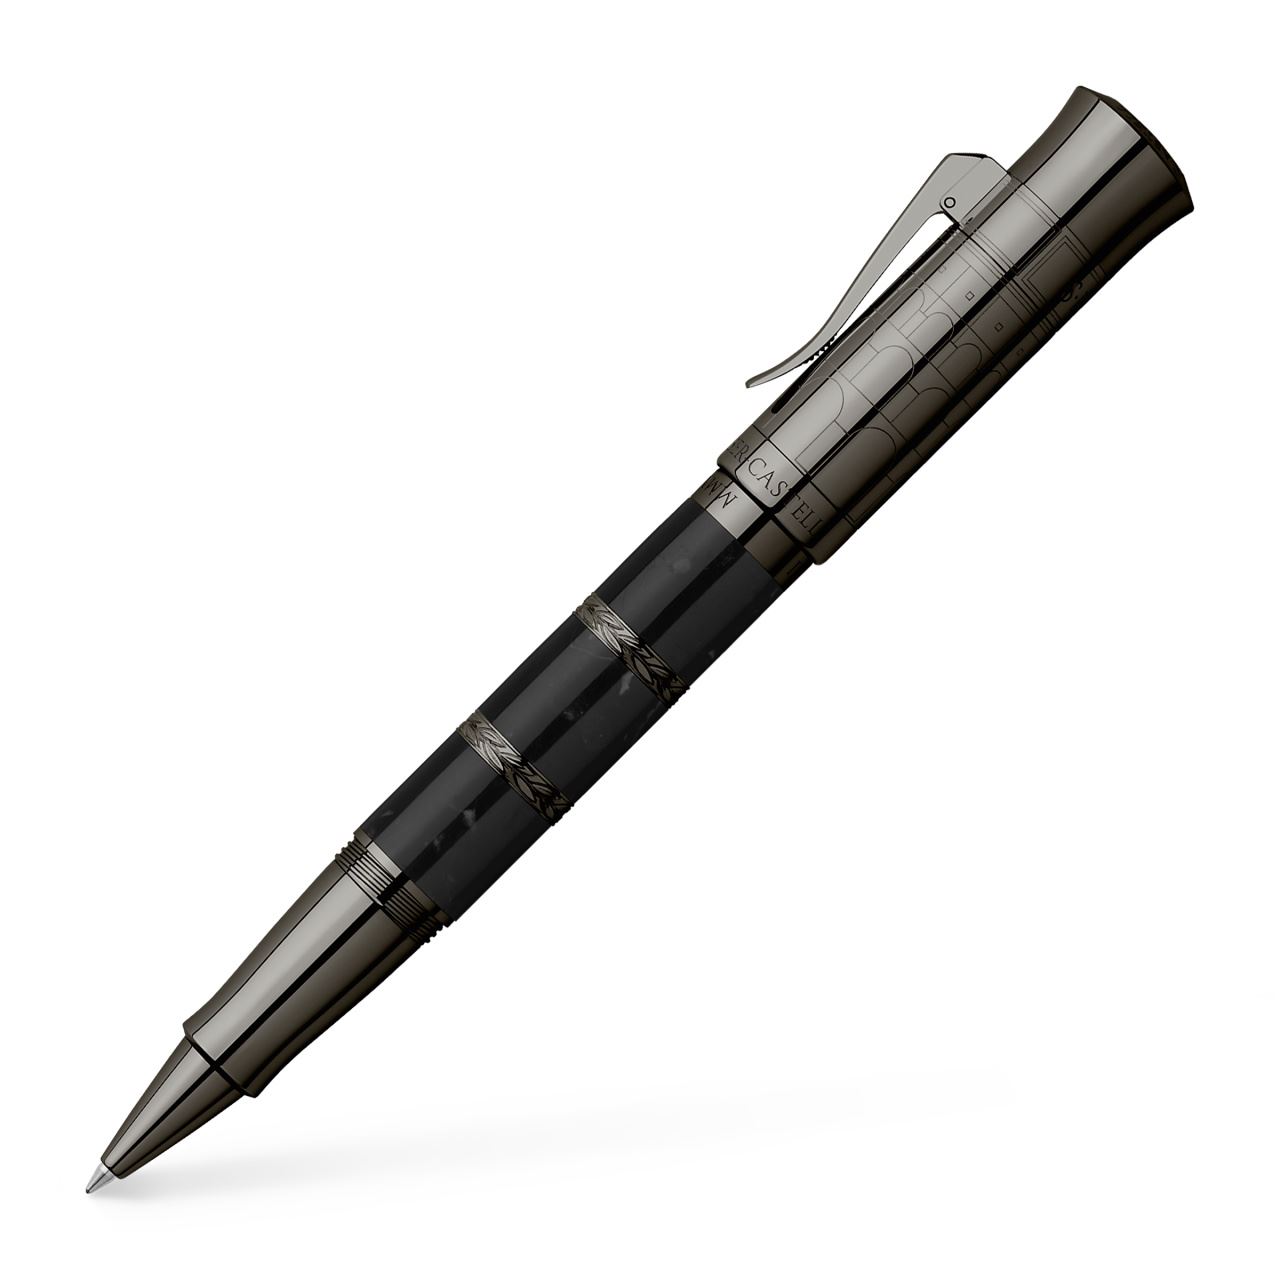 Graf-von-Faber-Castell - Roller Pen of the Year 2018 Black Edition